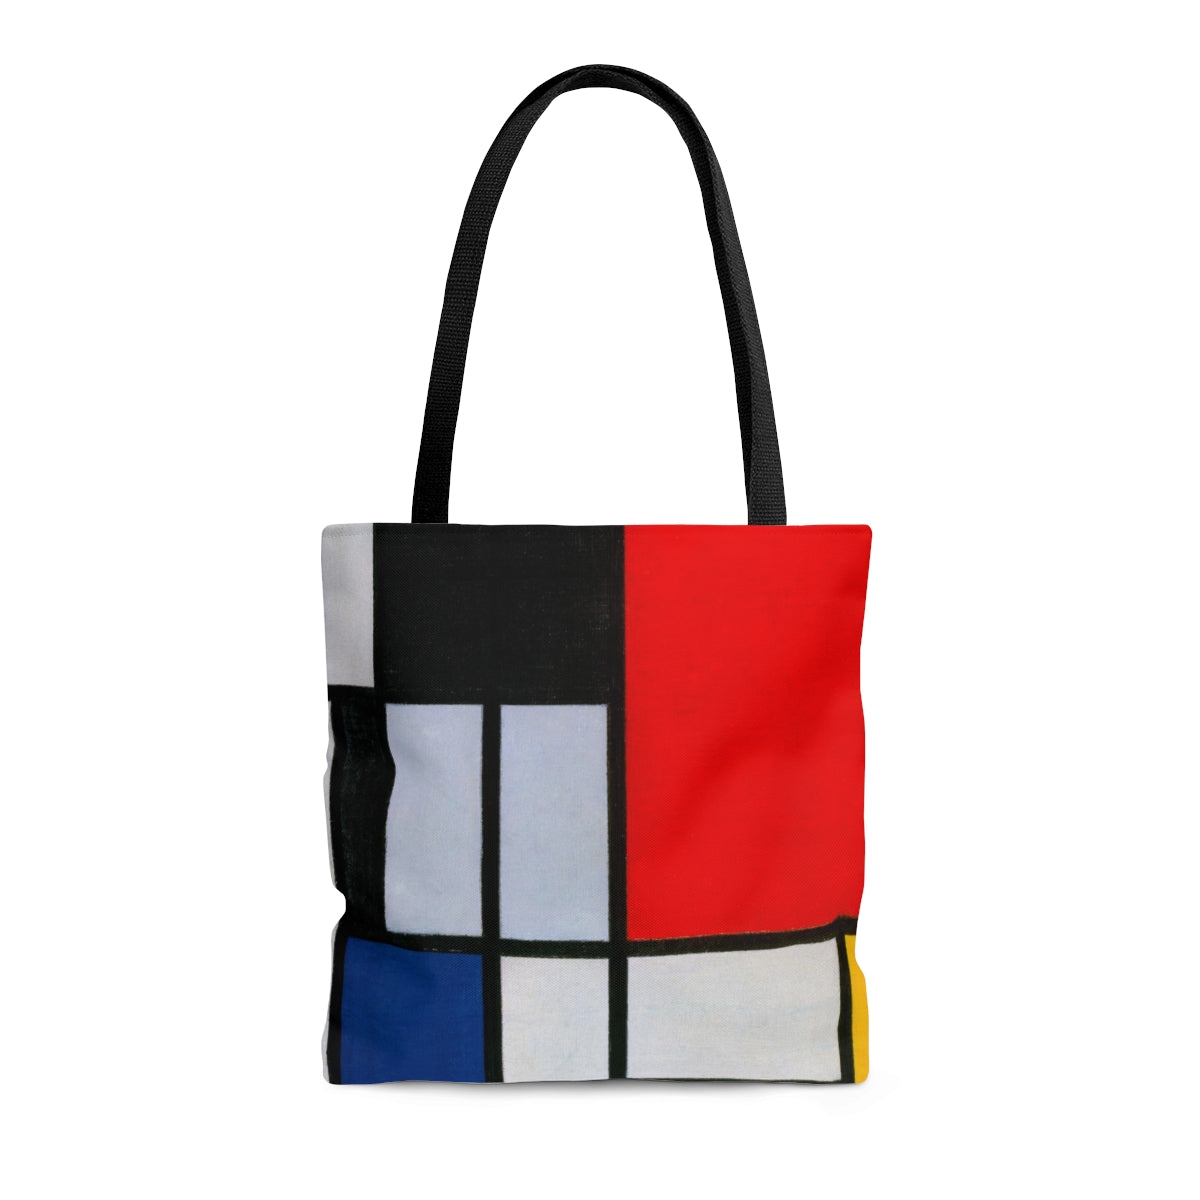 Piet Mondrian2 - Tote Bag